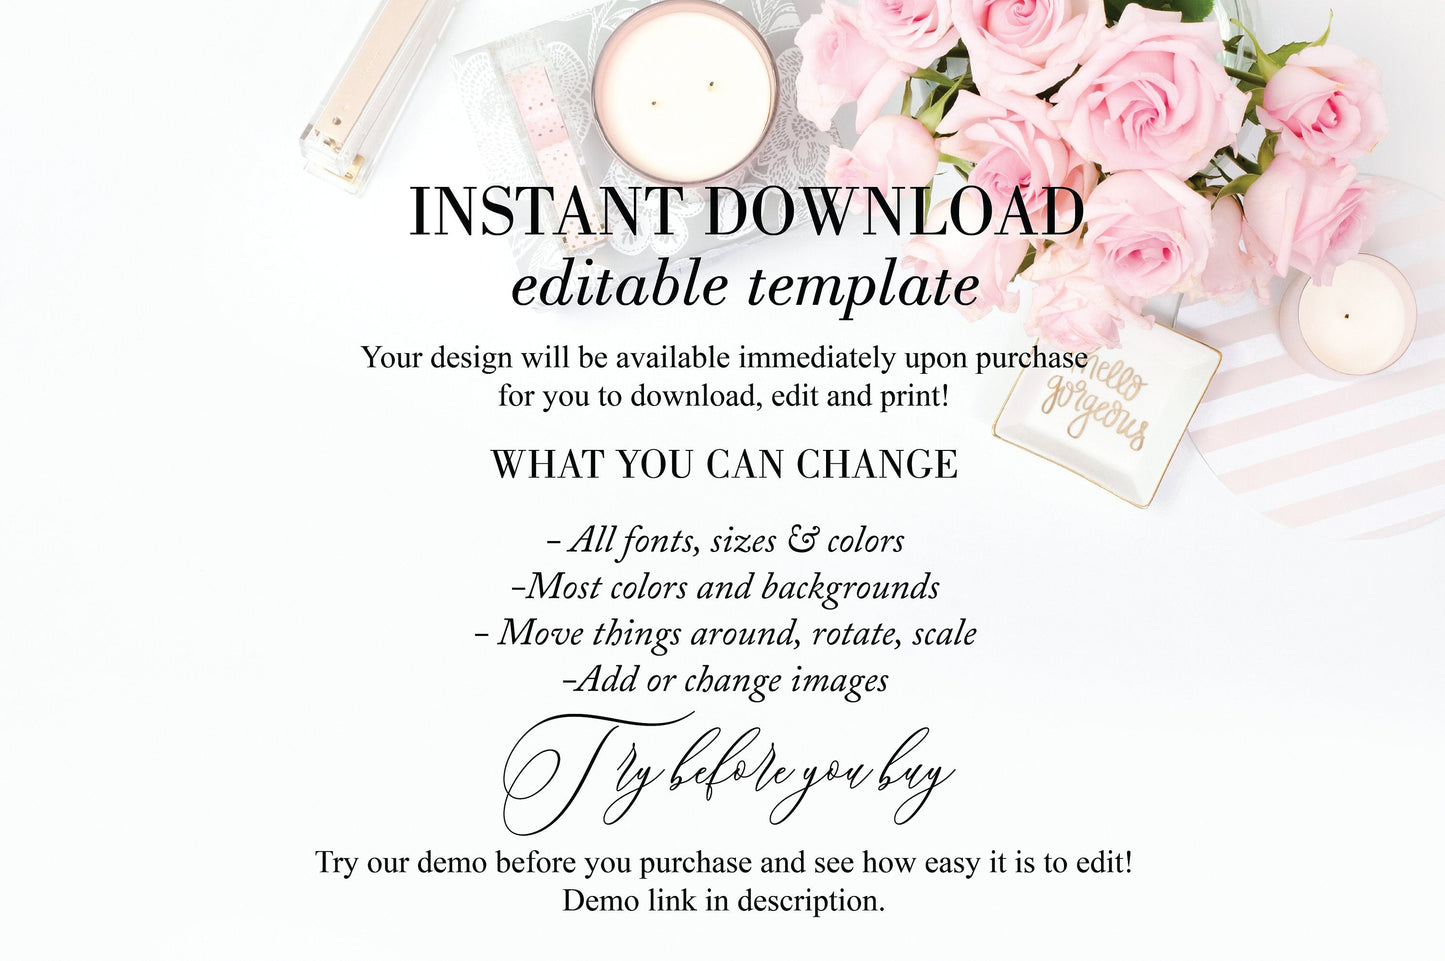 Wedding Menu Printable Wedding Menu Template Menu Floral Card Instant Download Editable Templett Greenery - Scarlett MENU|PROGRAMS|TIMELINE SAVVY PAPER CO